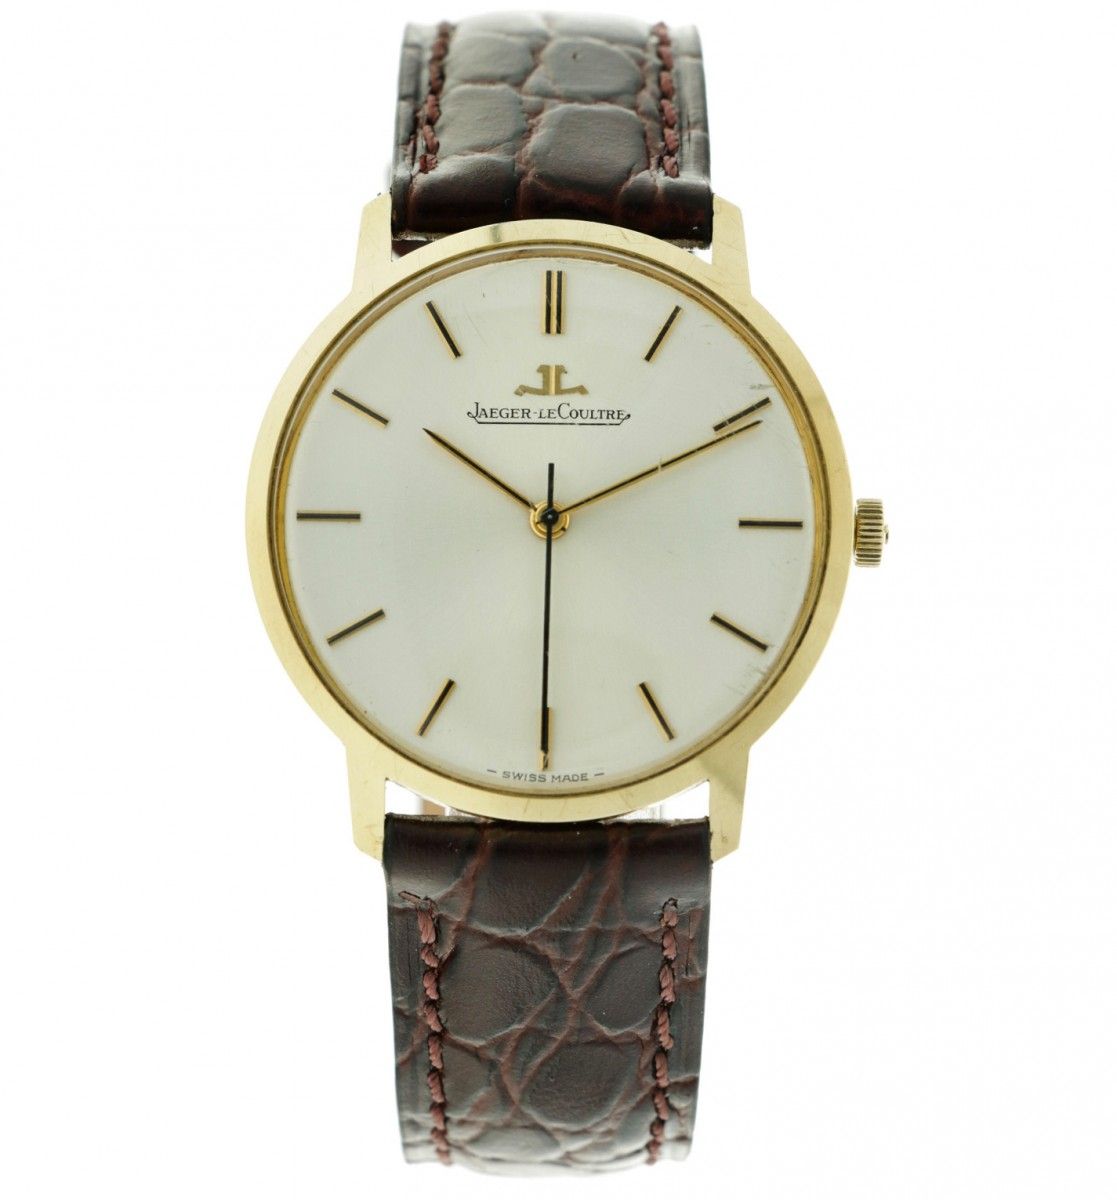 Jaeger-LeCoultre - Men's watch - apprx. 1970. Cassa: oro giallo (18 kt.) - cintu&hellip;